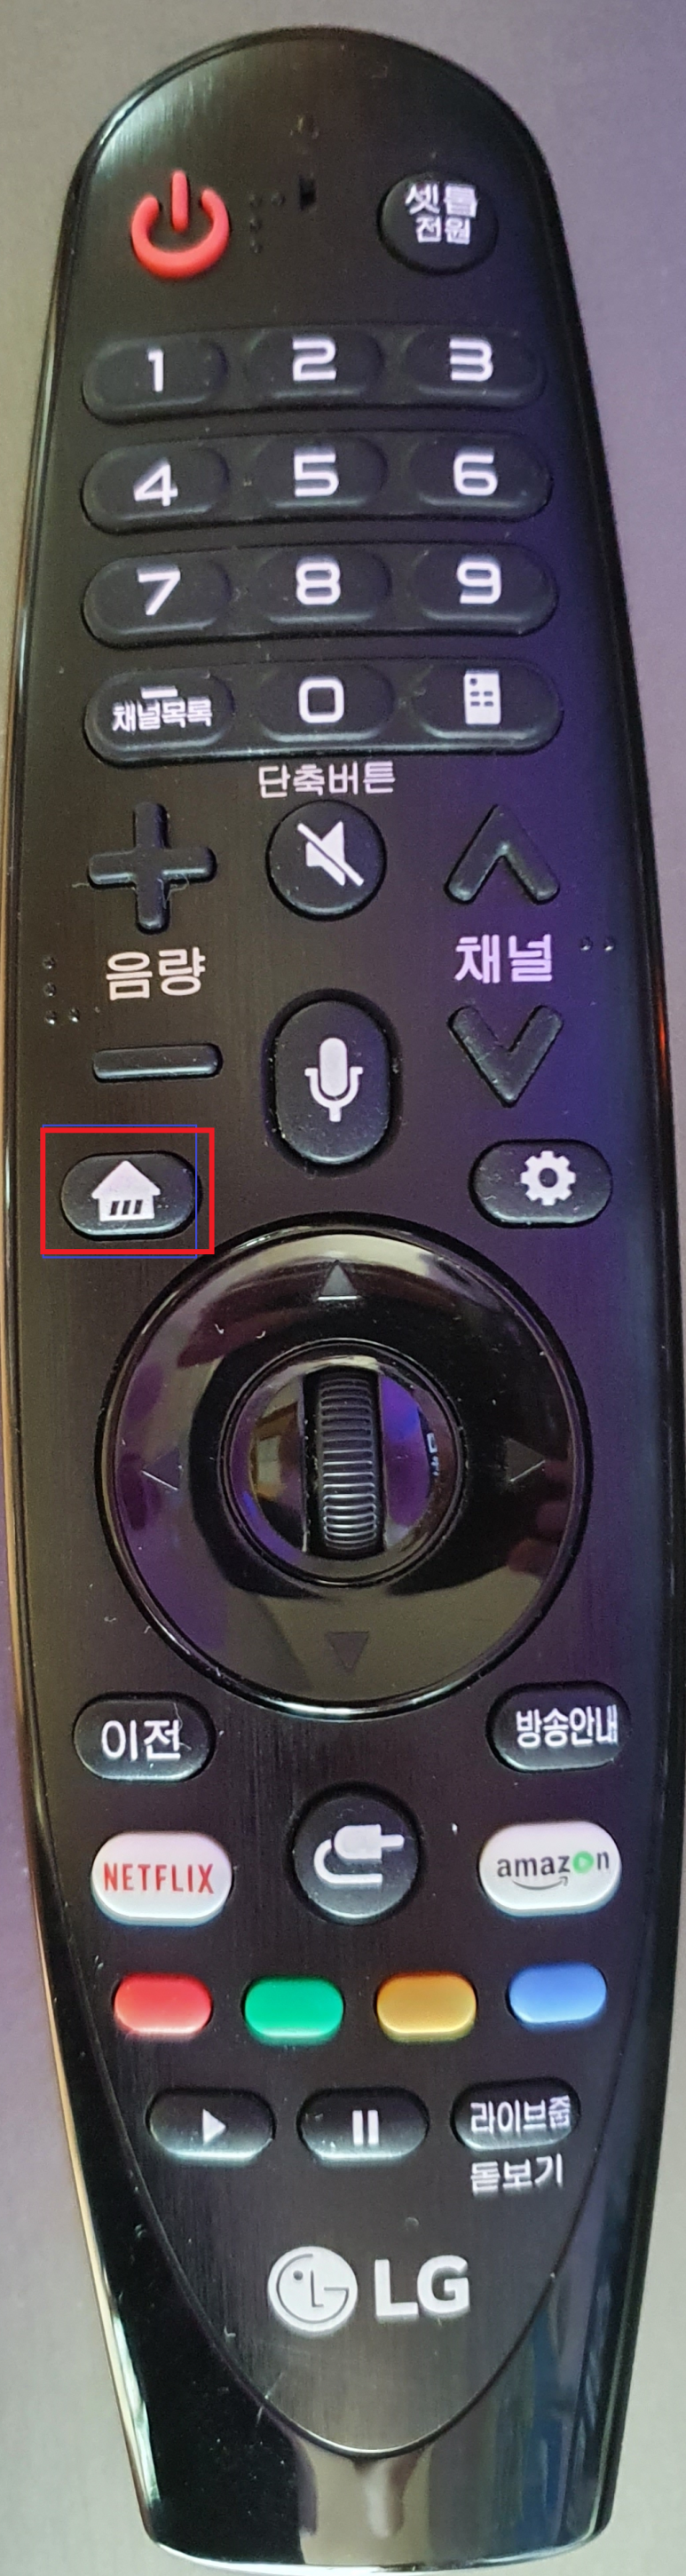 LG 스마트 TV 리모콘 - 홈 버튼 누름